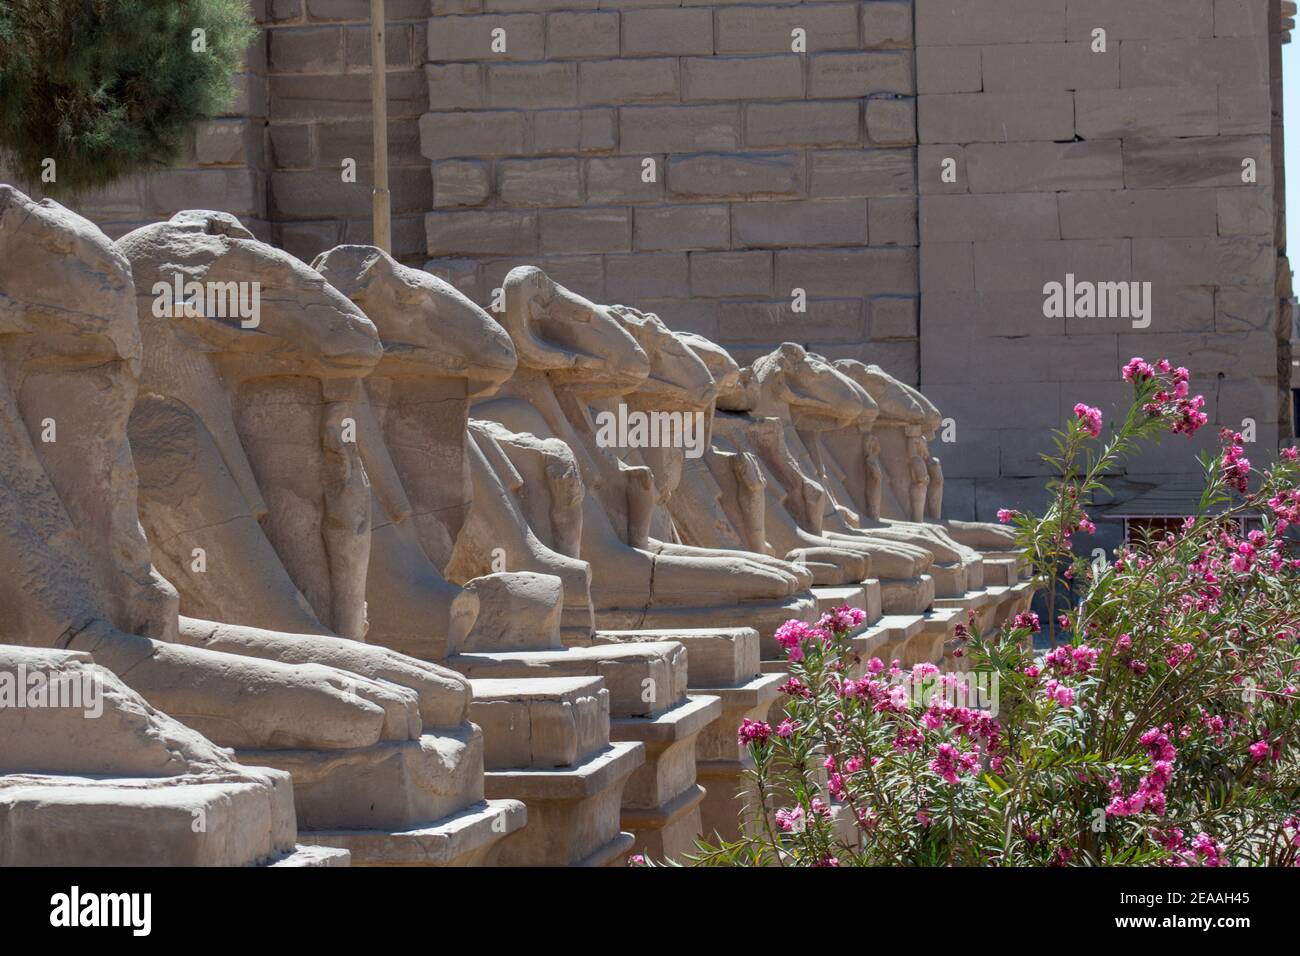 Templo de Karnak, Luxor, Egipto Foto de stock